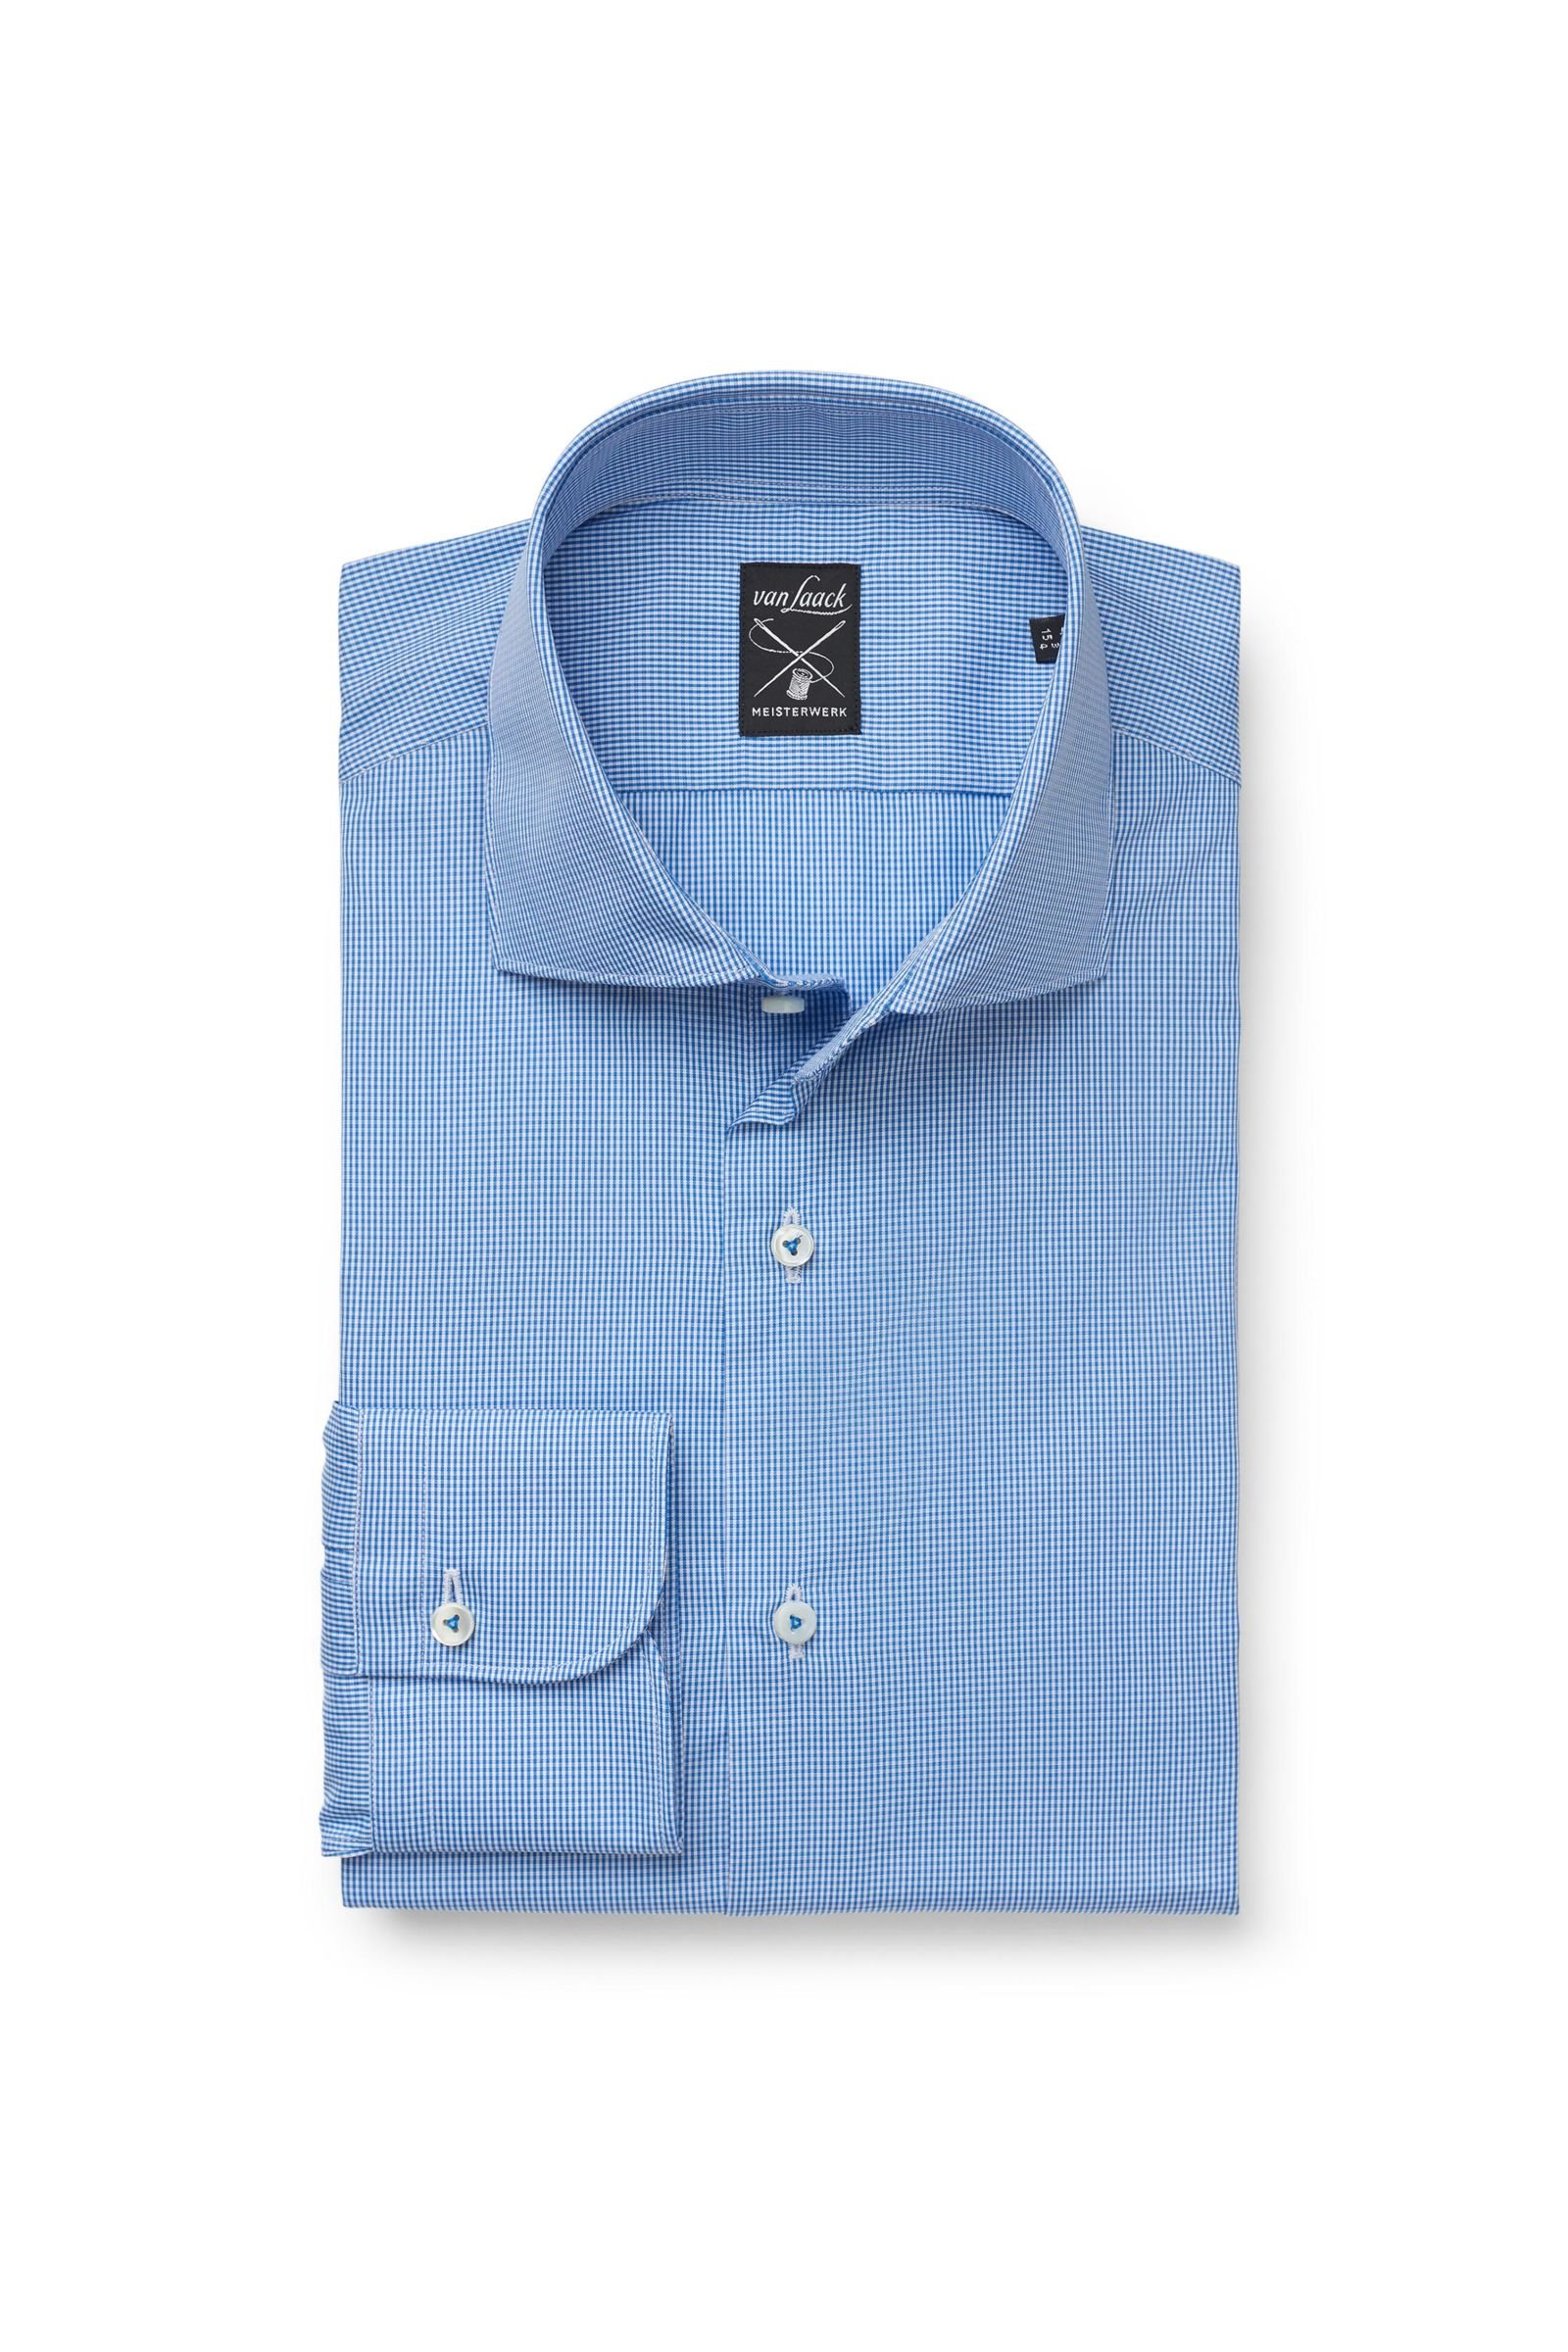 Business shirt 'Mivara Tailor Fit' shark collar grey-blue checked